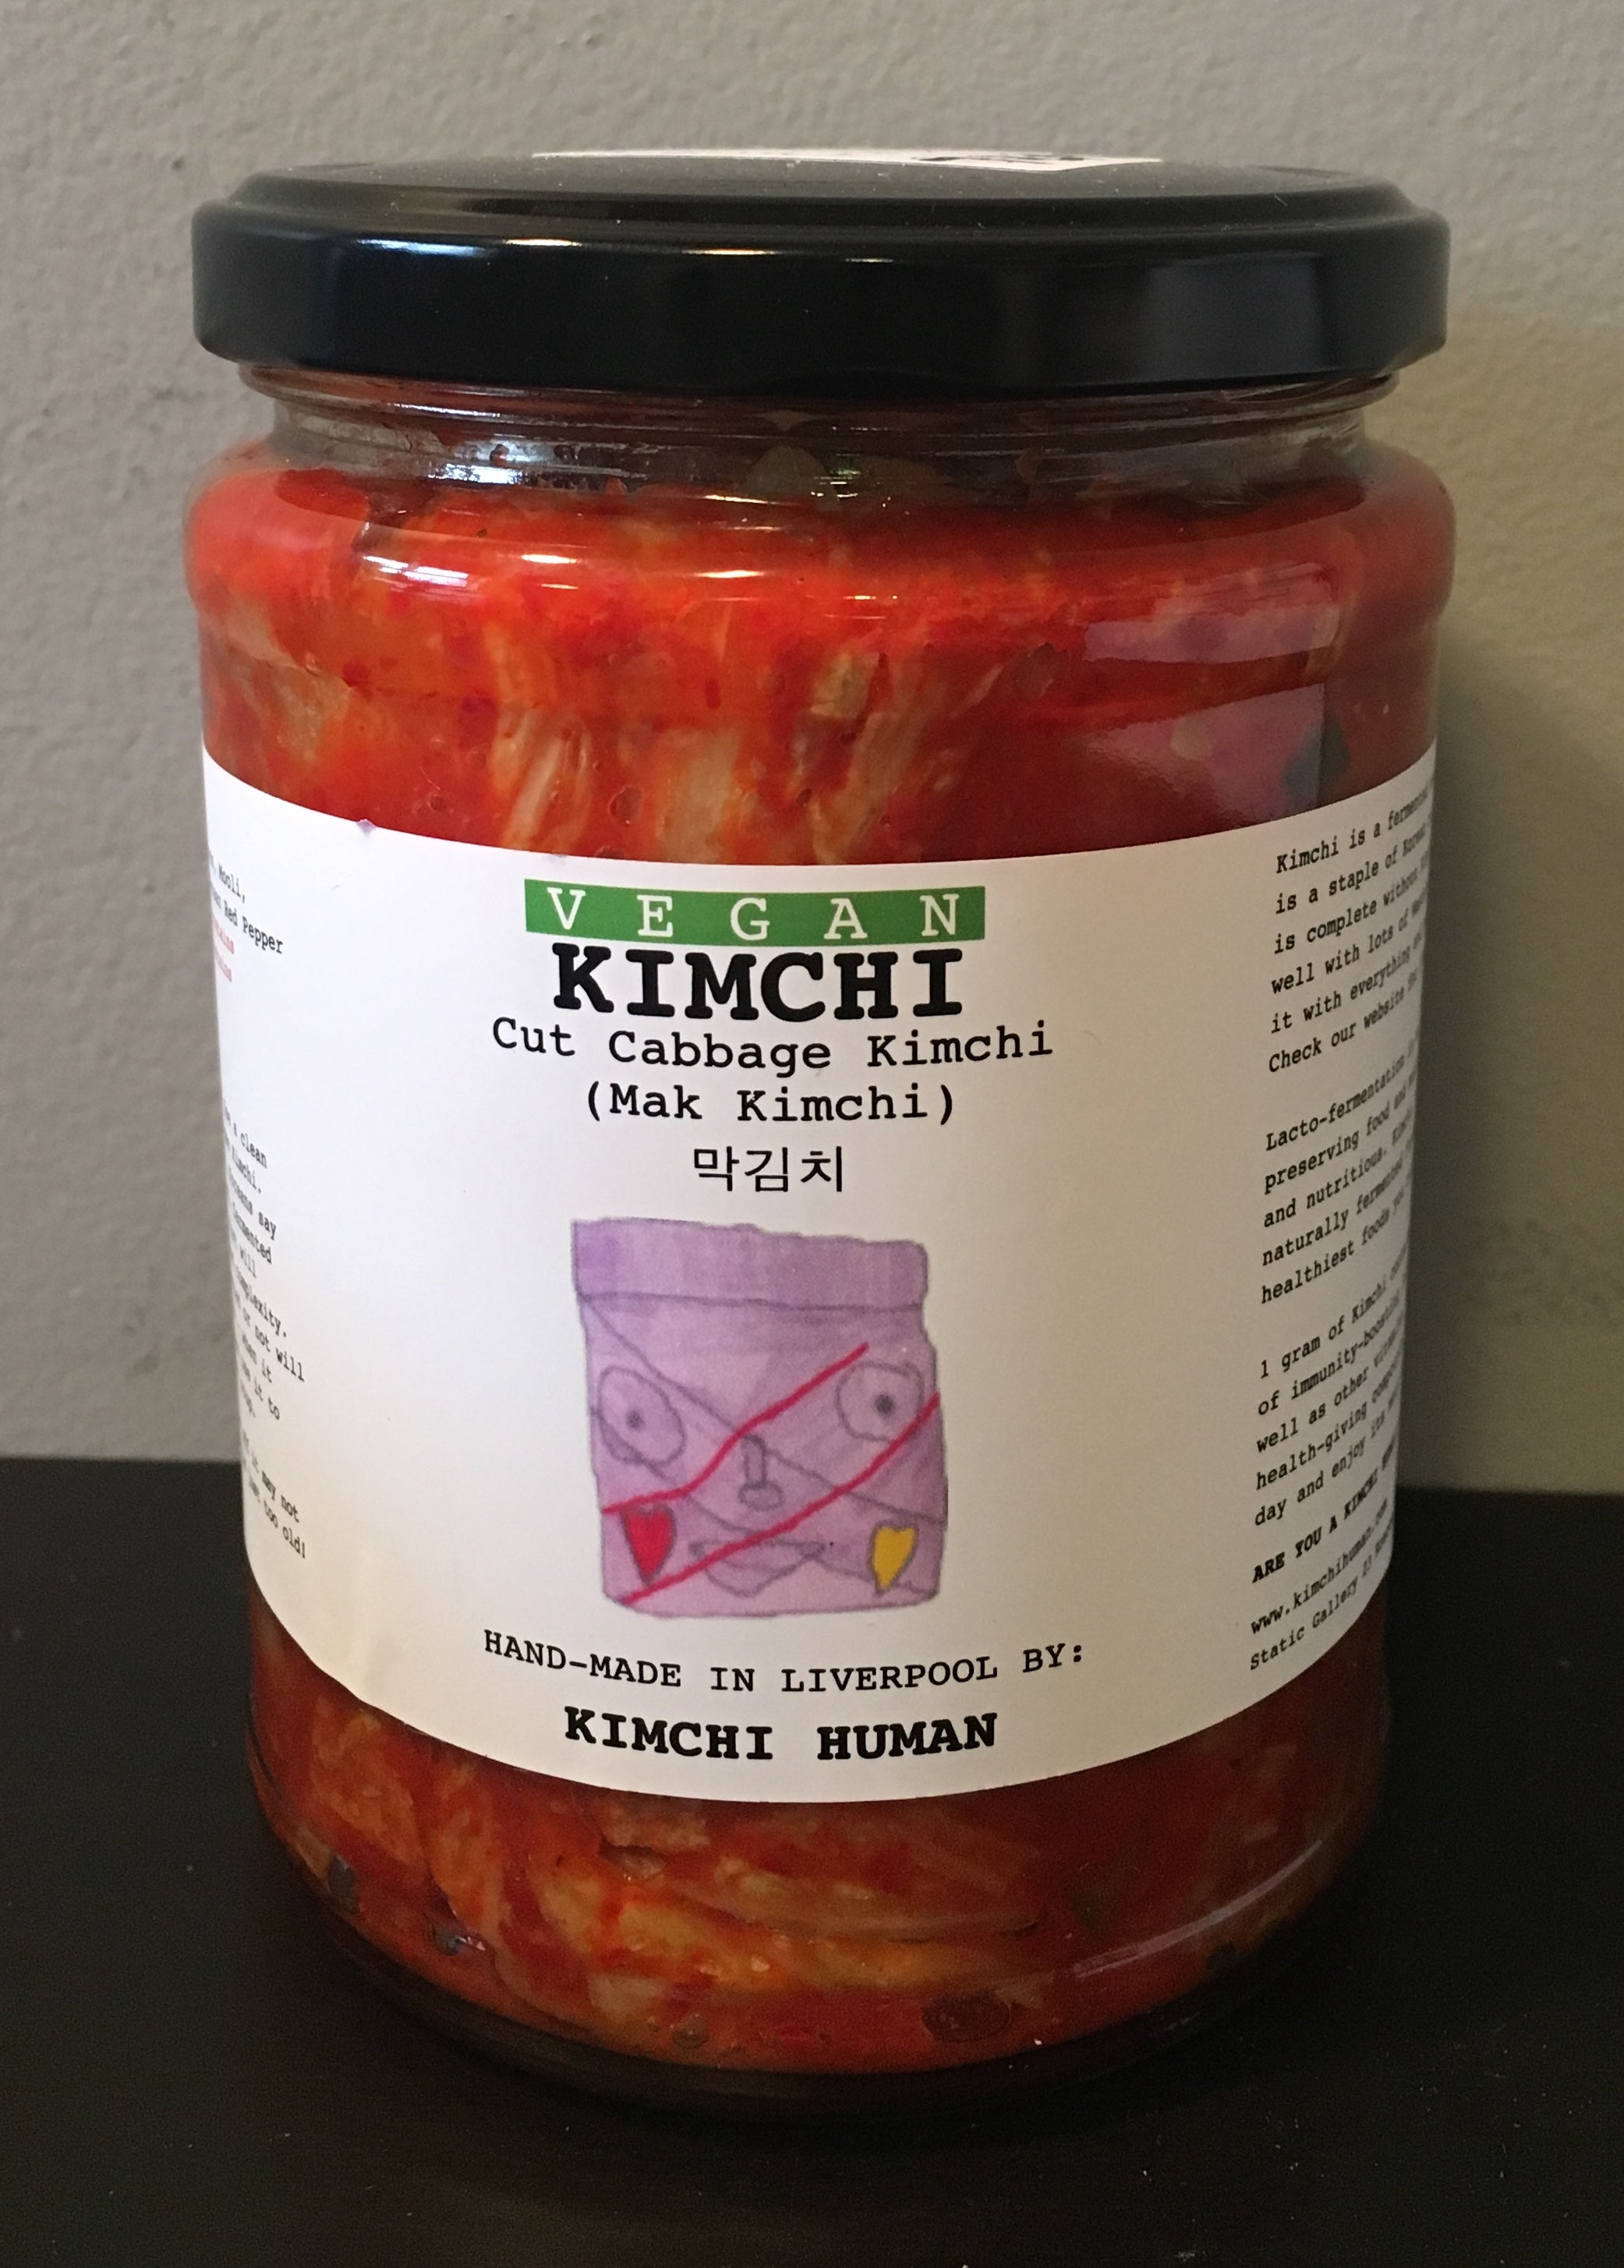 Vegan Mak Kimchi - Cut Cabbage Kimchi -  470g approx